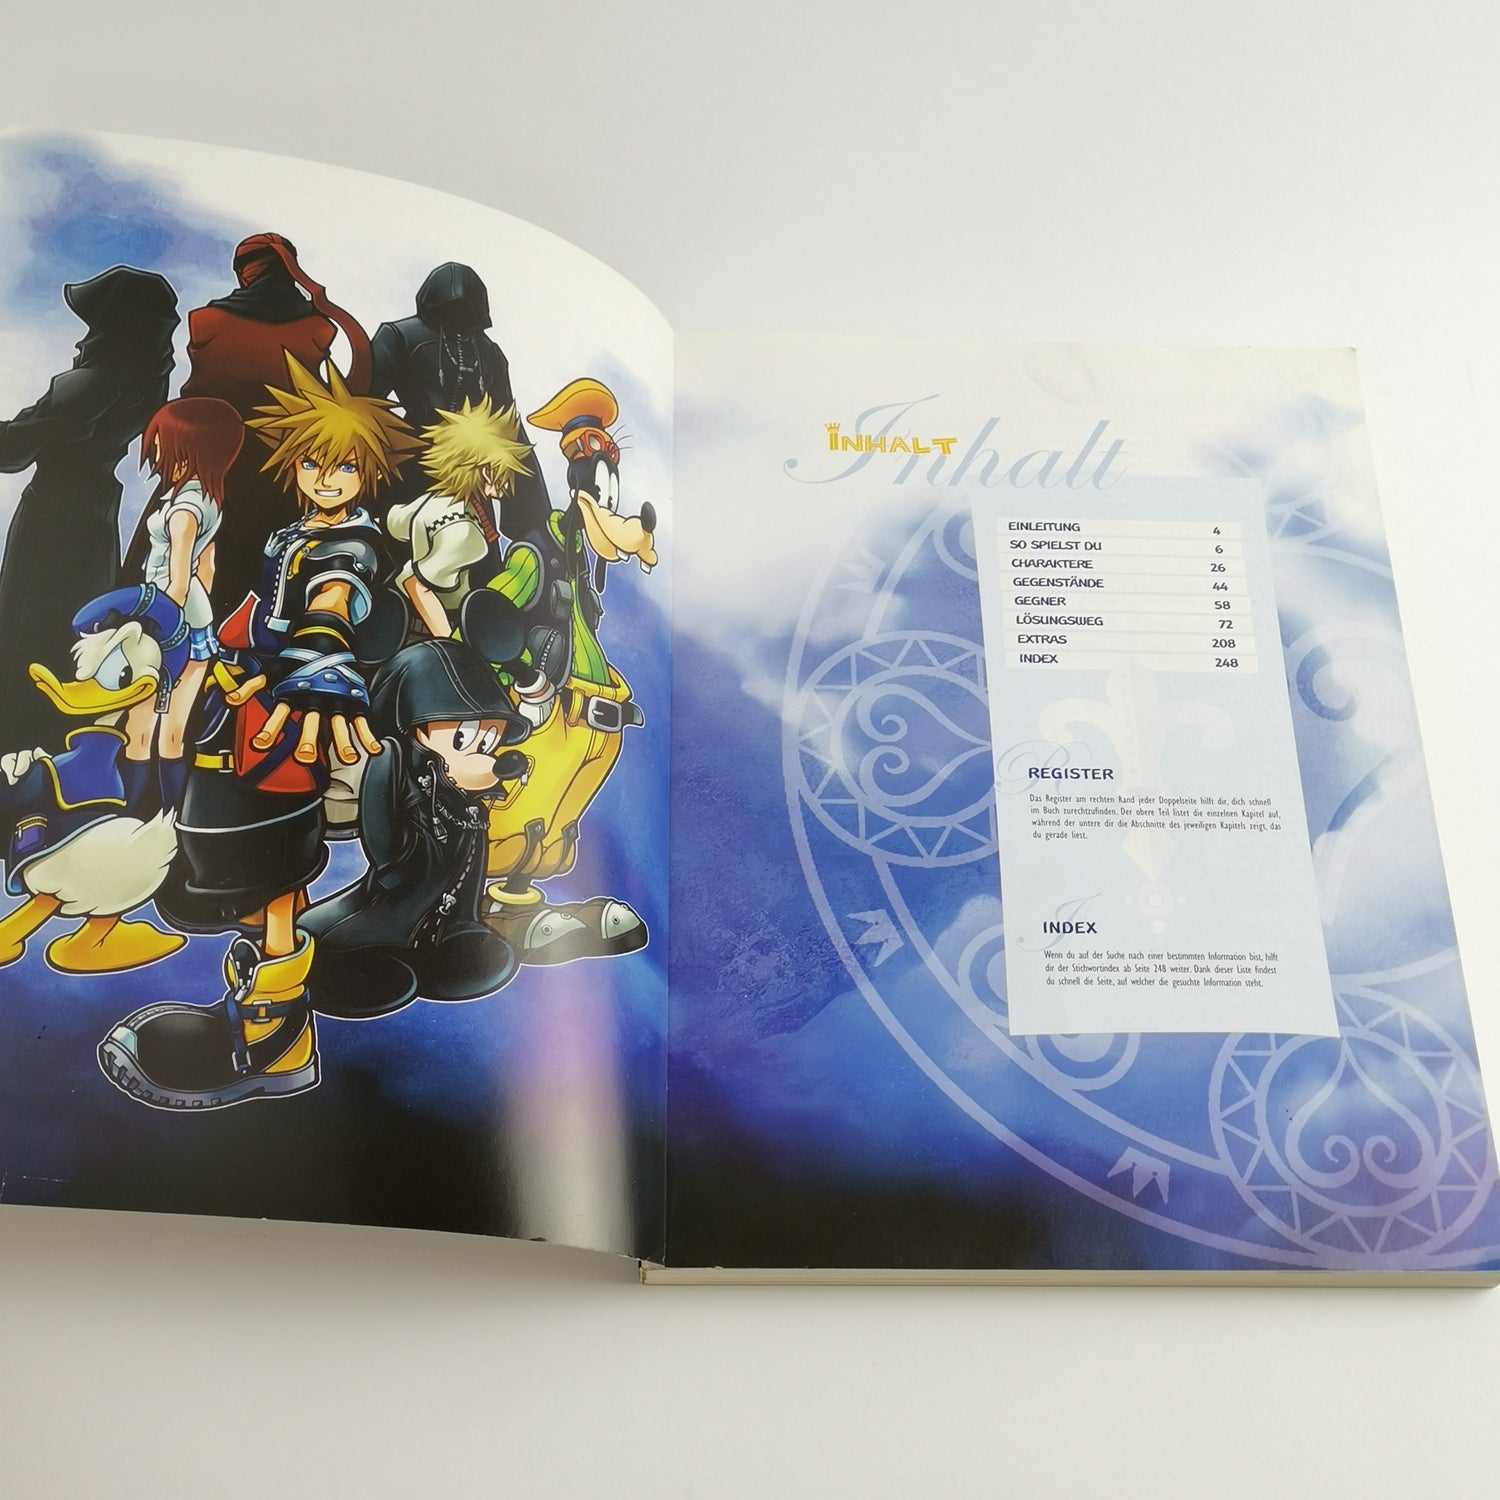 Sony Playstation 2 Spiel : Kingdom Hearts 2 + Lösungsbuch / Guide | PS2 OVP PAL